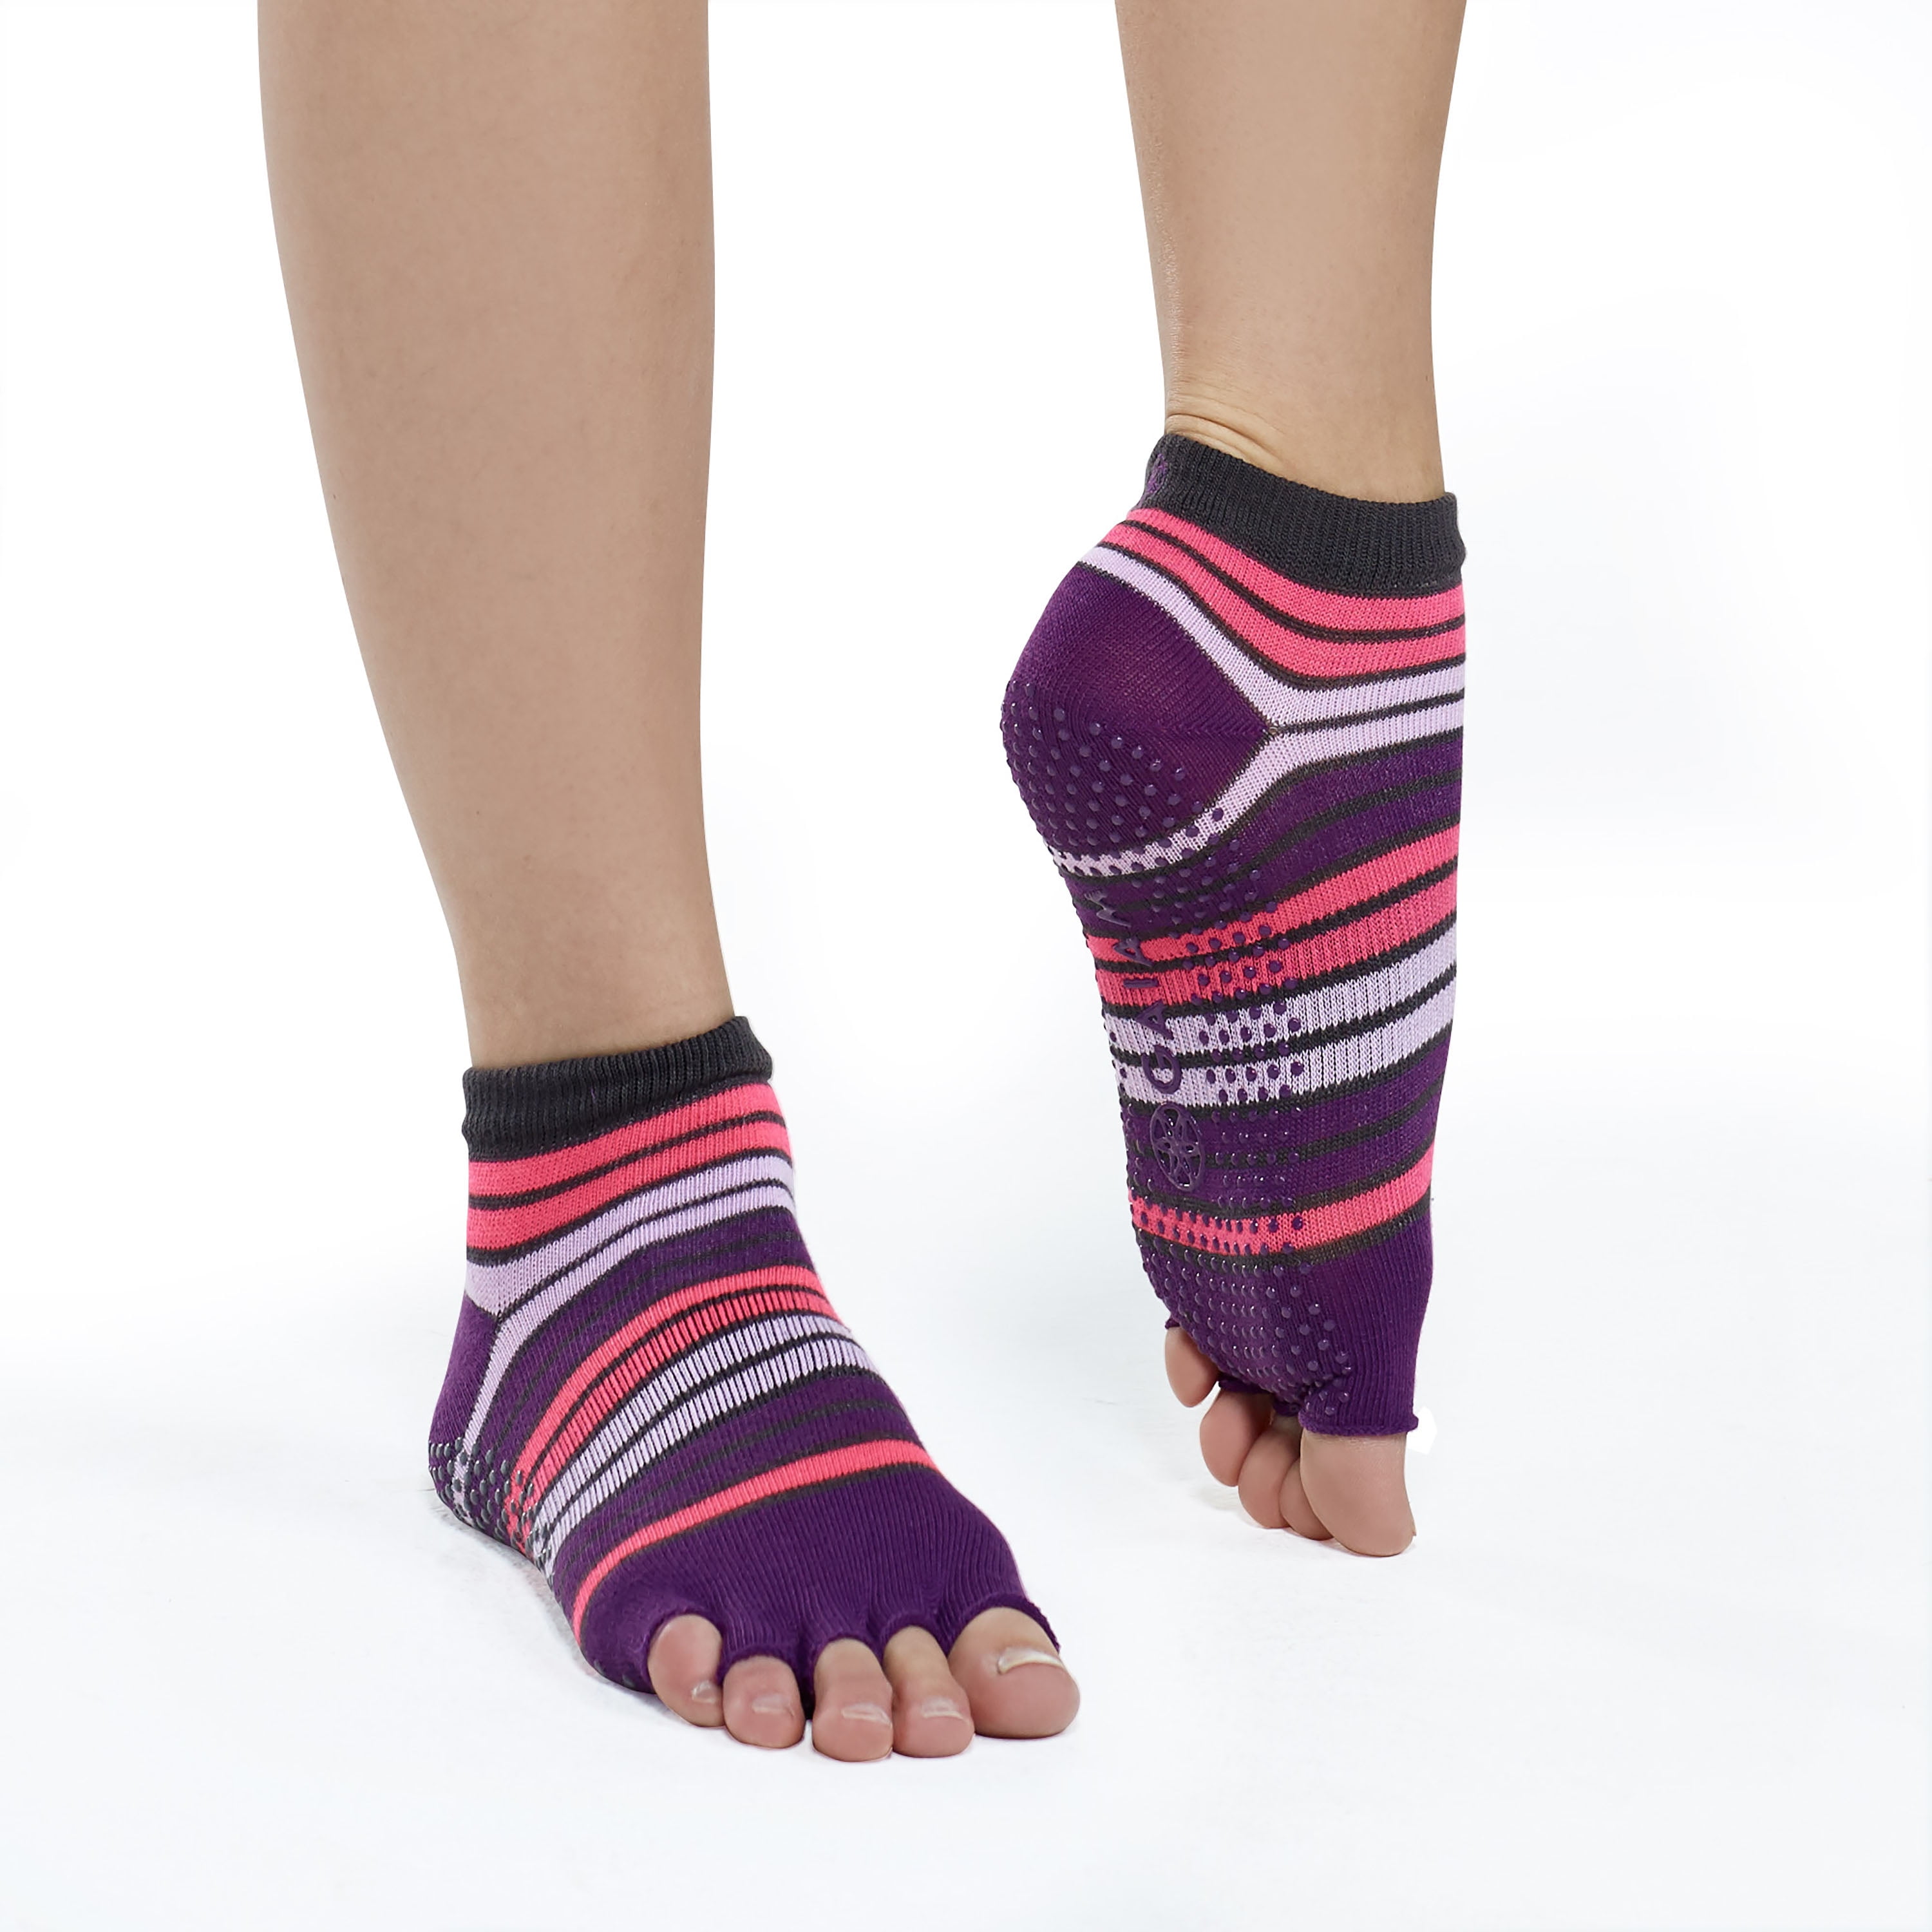 Gaiam Toeless Grippy Yoga Socks, Grey/Black, Small/Medium 